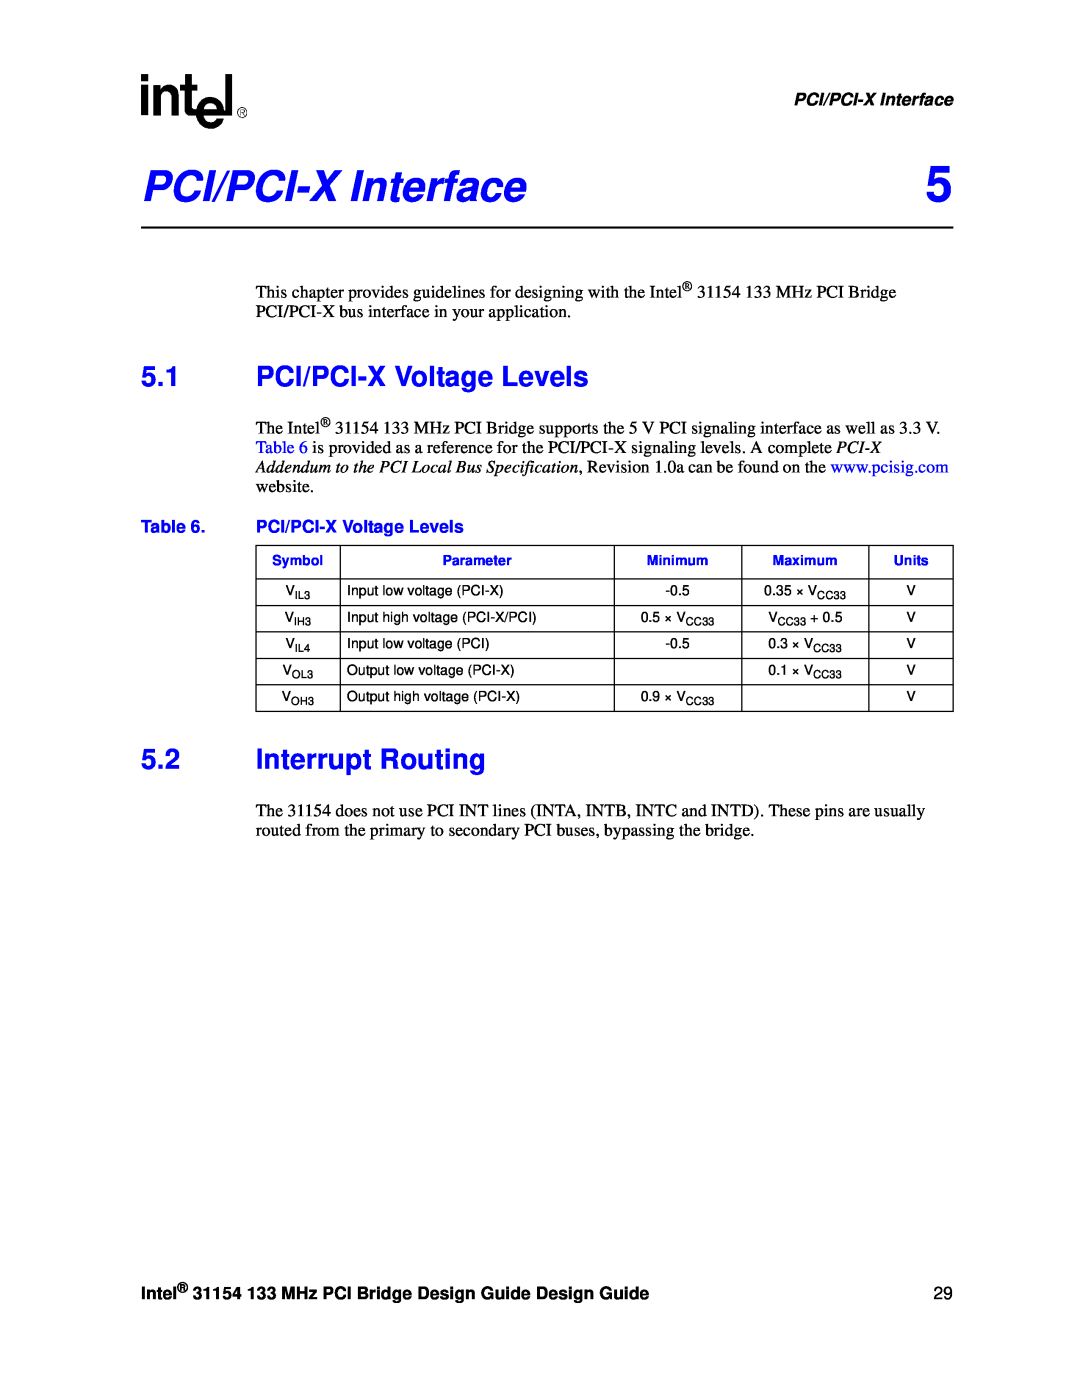 Intel 31154 manual PCI/PCI-X Interface, 5.1 PCI/PCI-X Voltage Levels, Interrupt Routing 